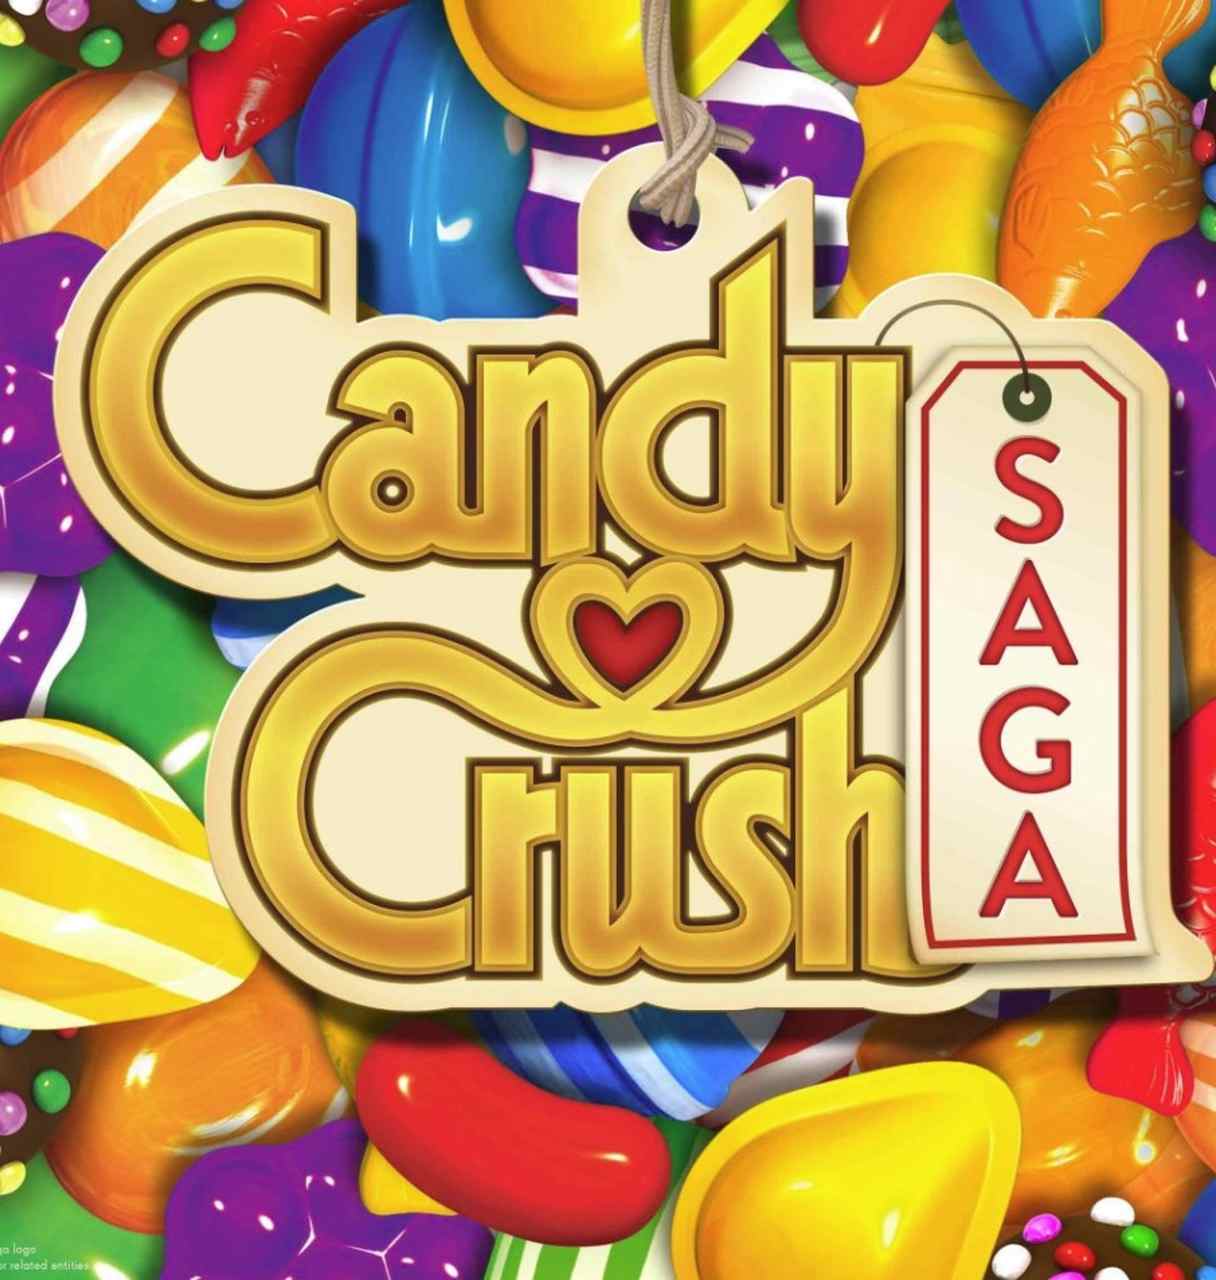 Candy Crush Saga Advanced Guide (Paperback) 